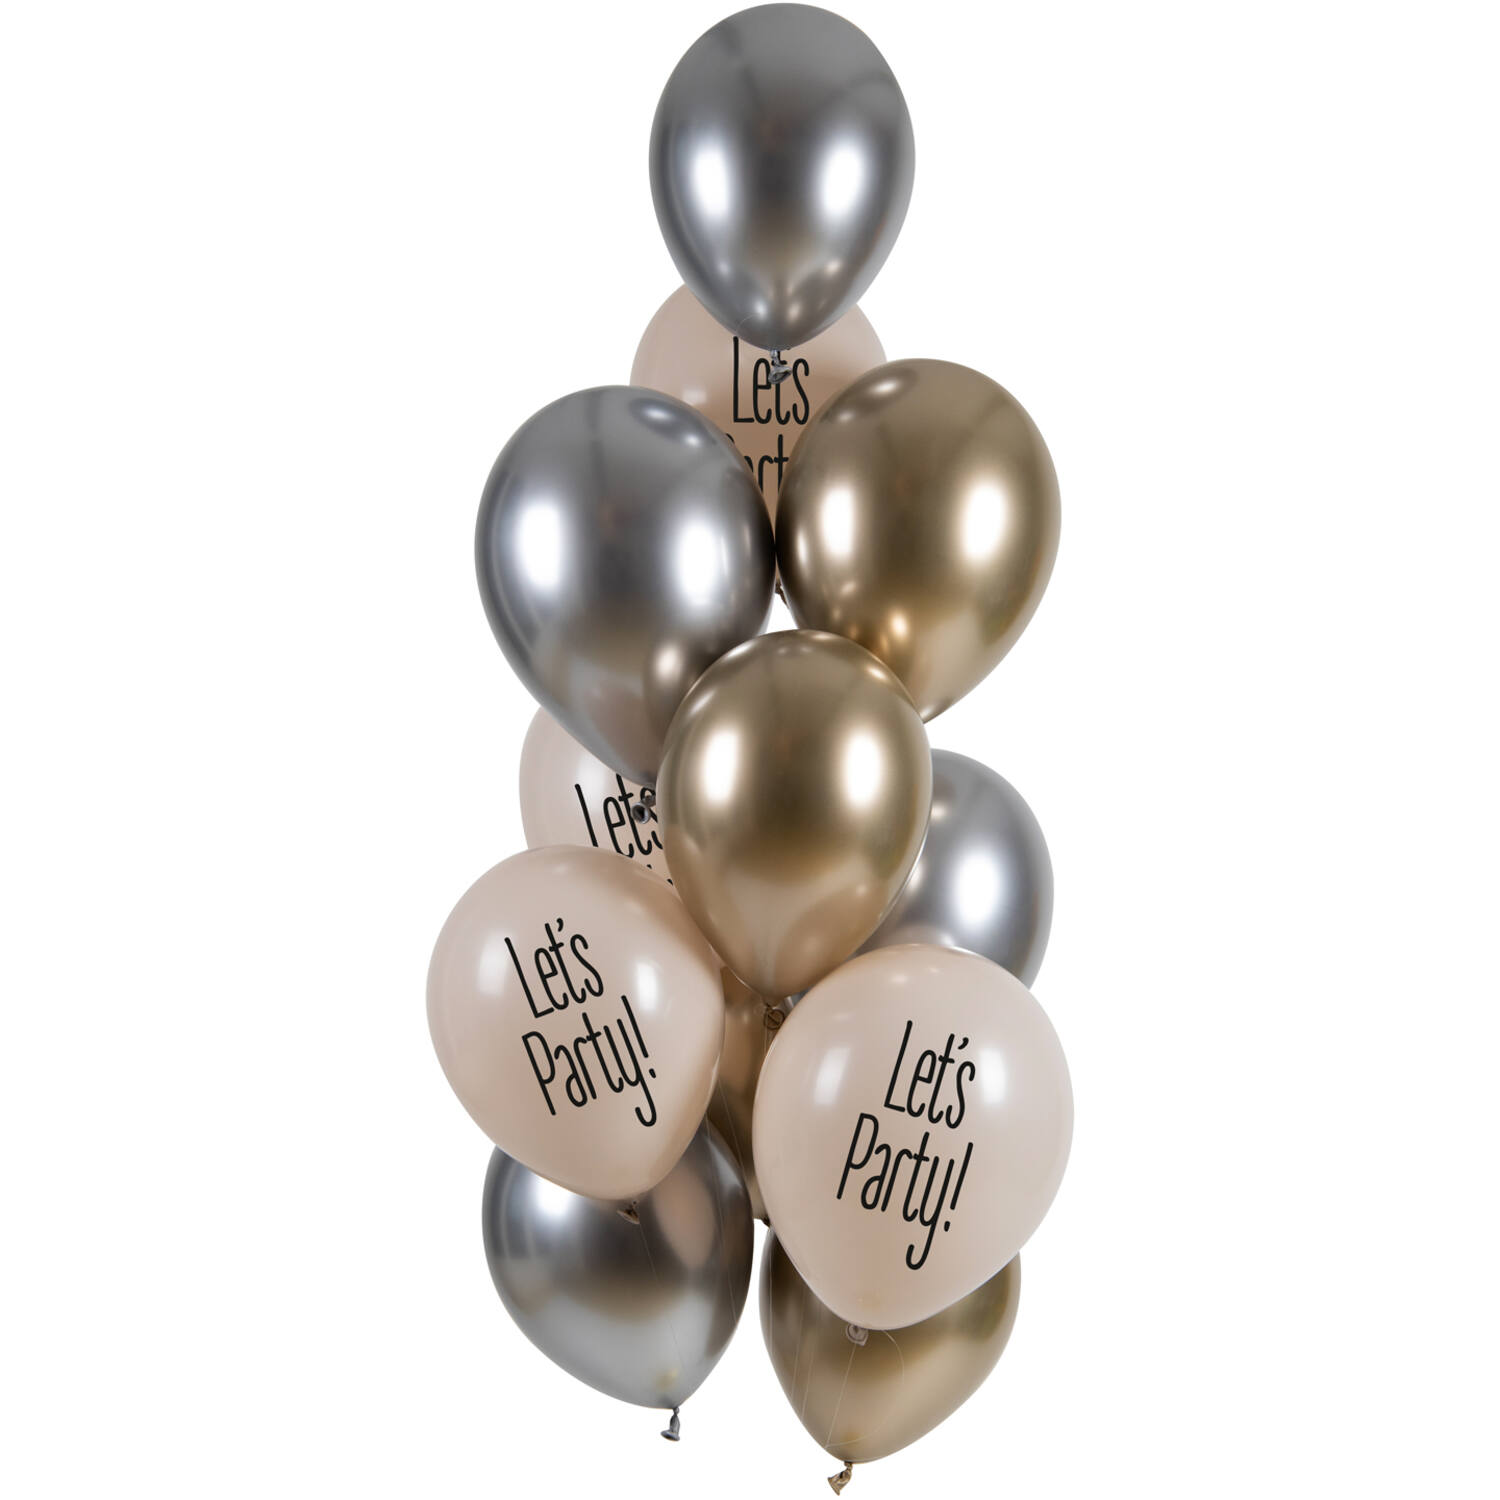 NEU Premium-Latex-Luftballons Let's Party, Rosegold, 33cm, 12 Stk.